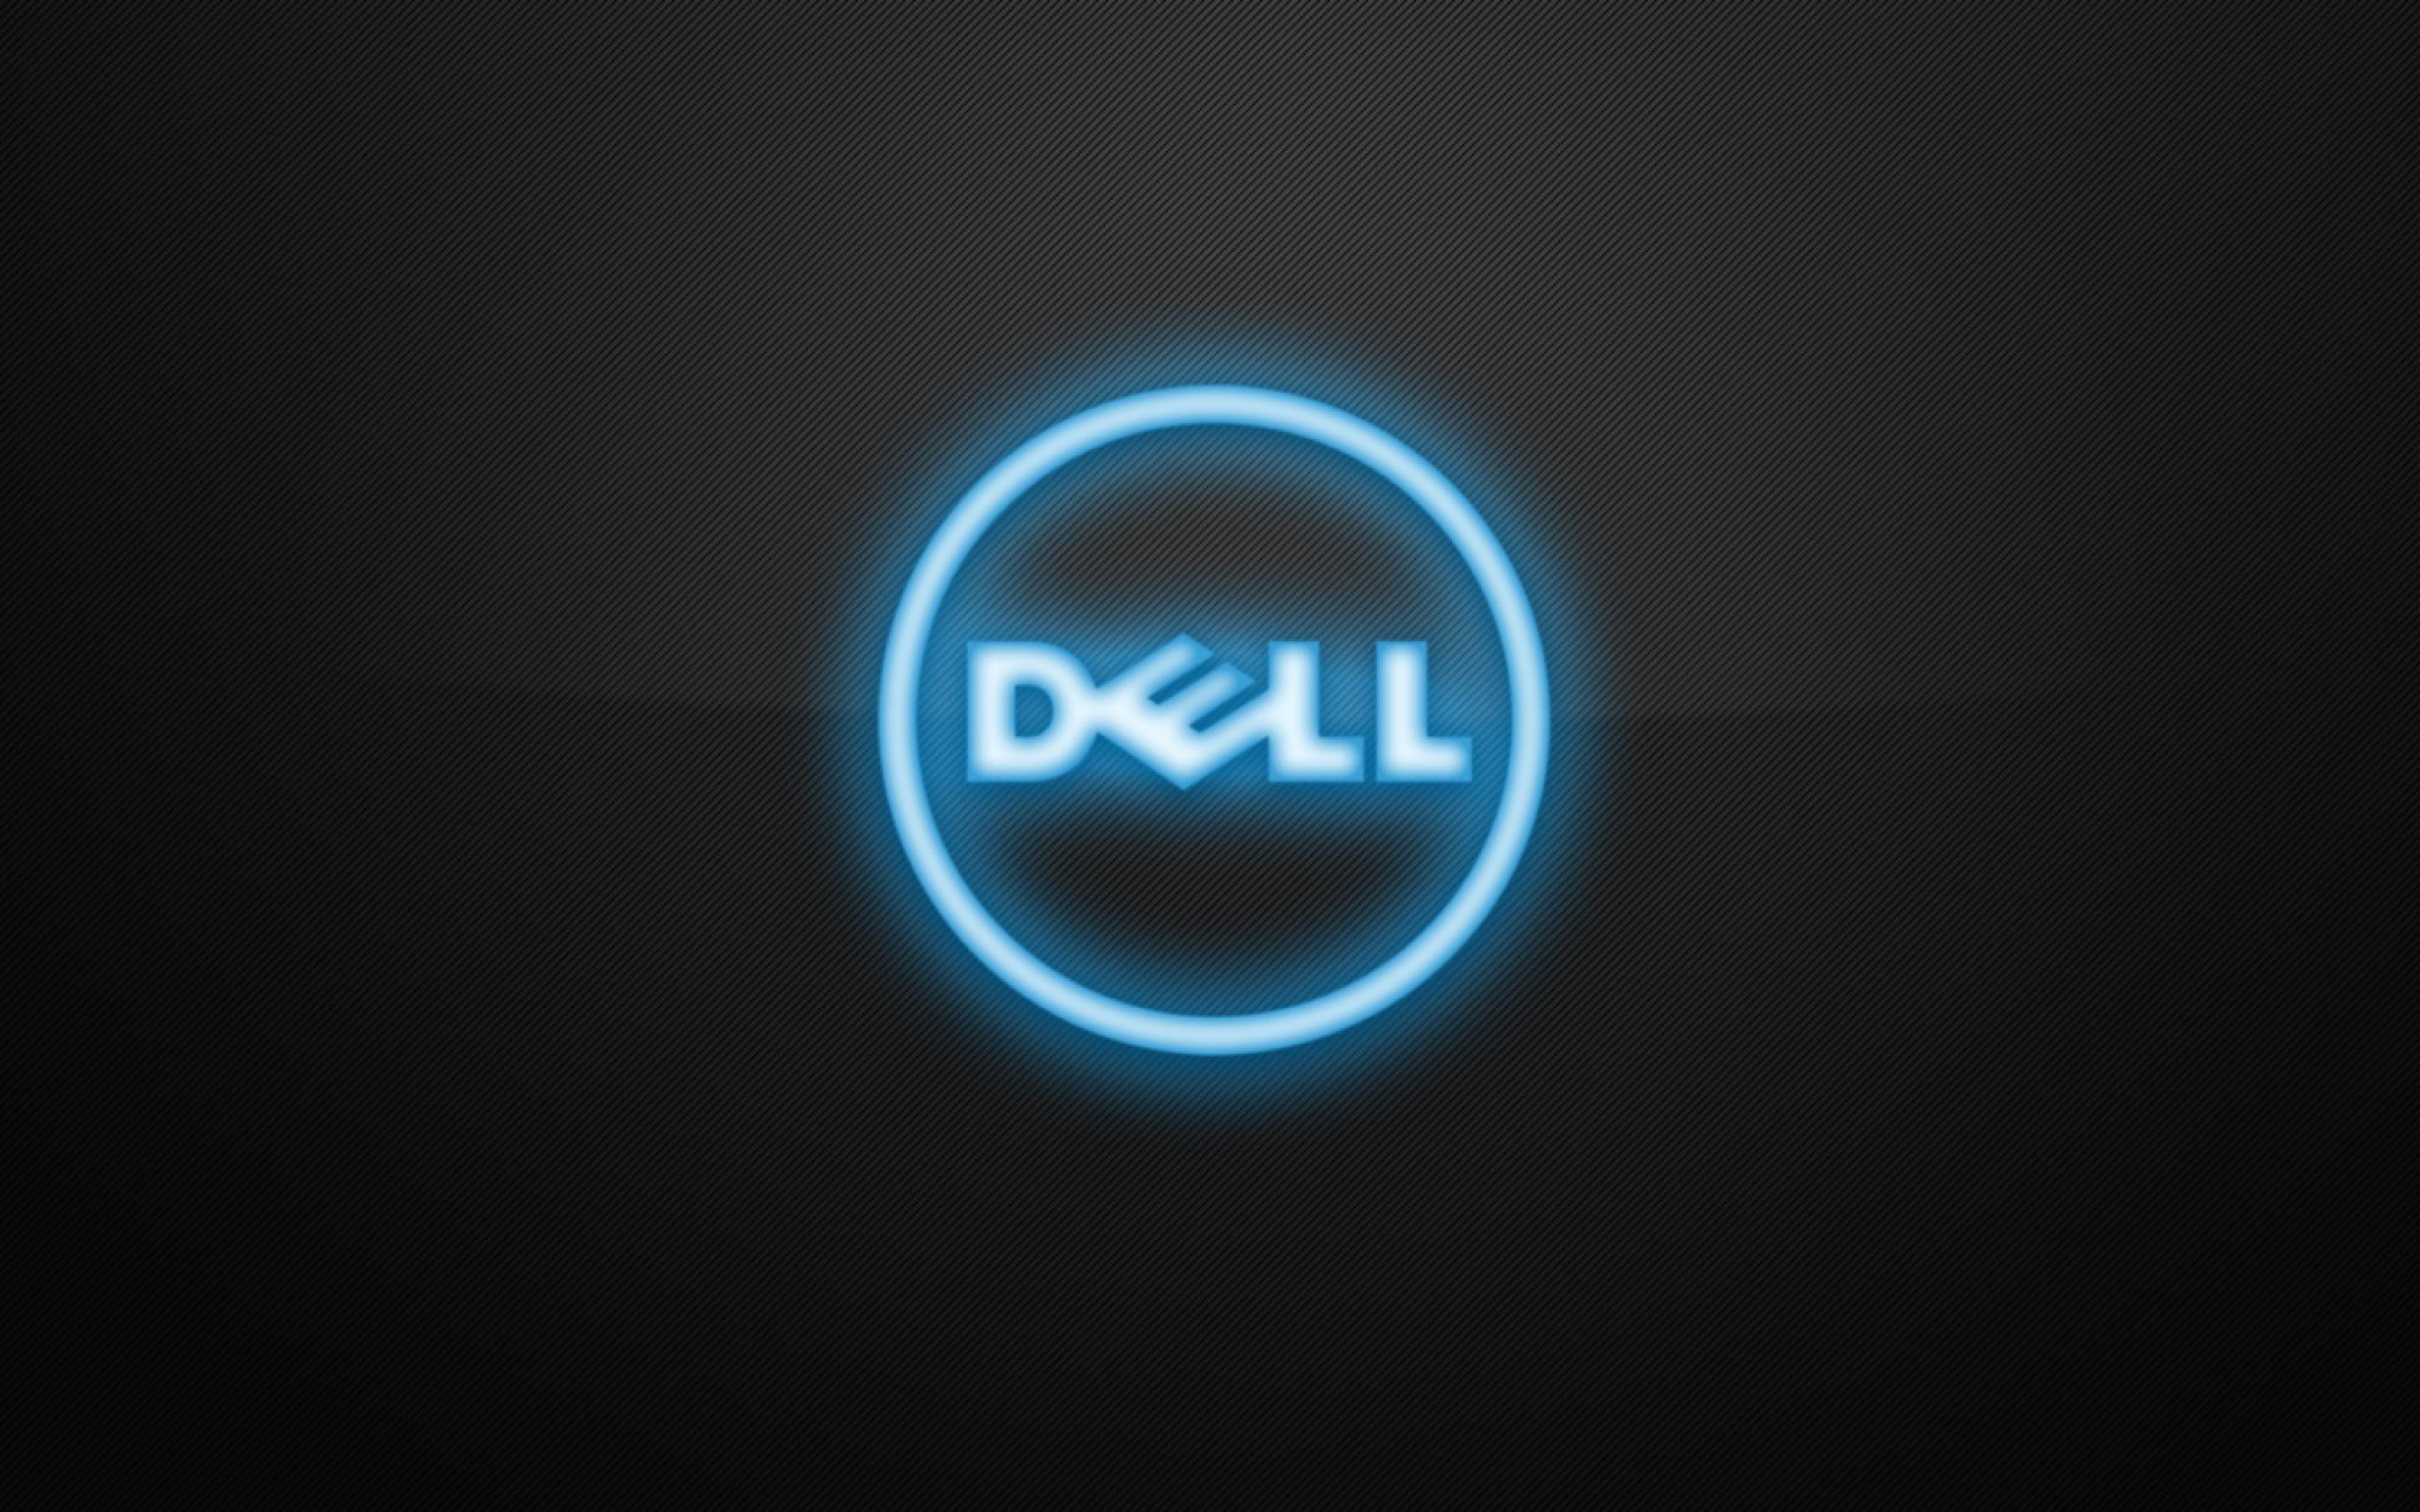 Dell Logo Desktop Wallpaper 877 3840x2400 px Picky